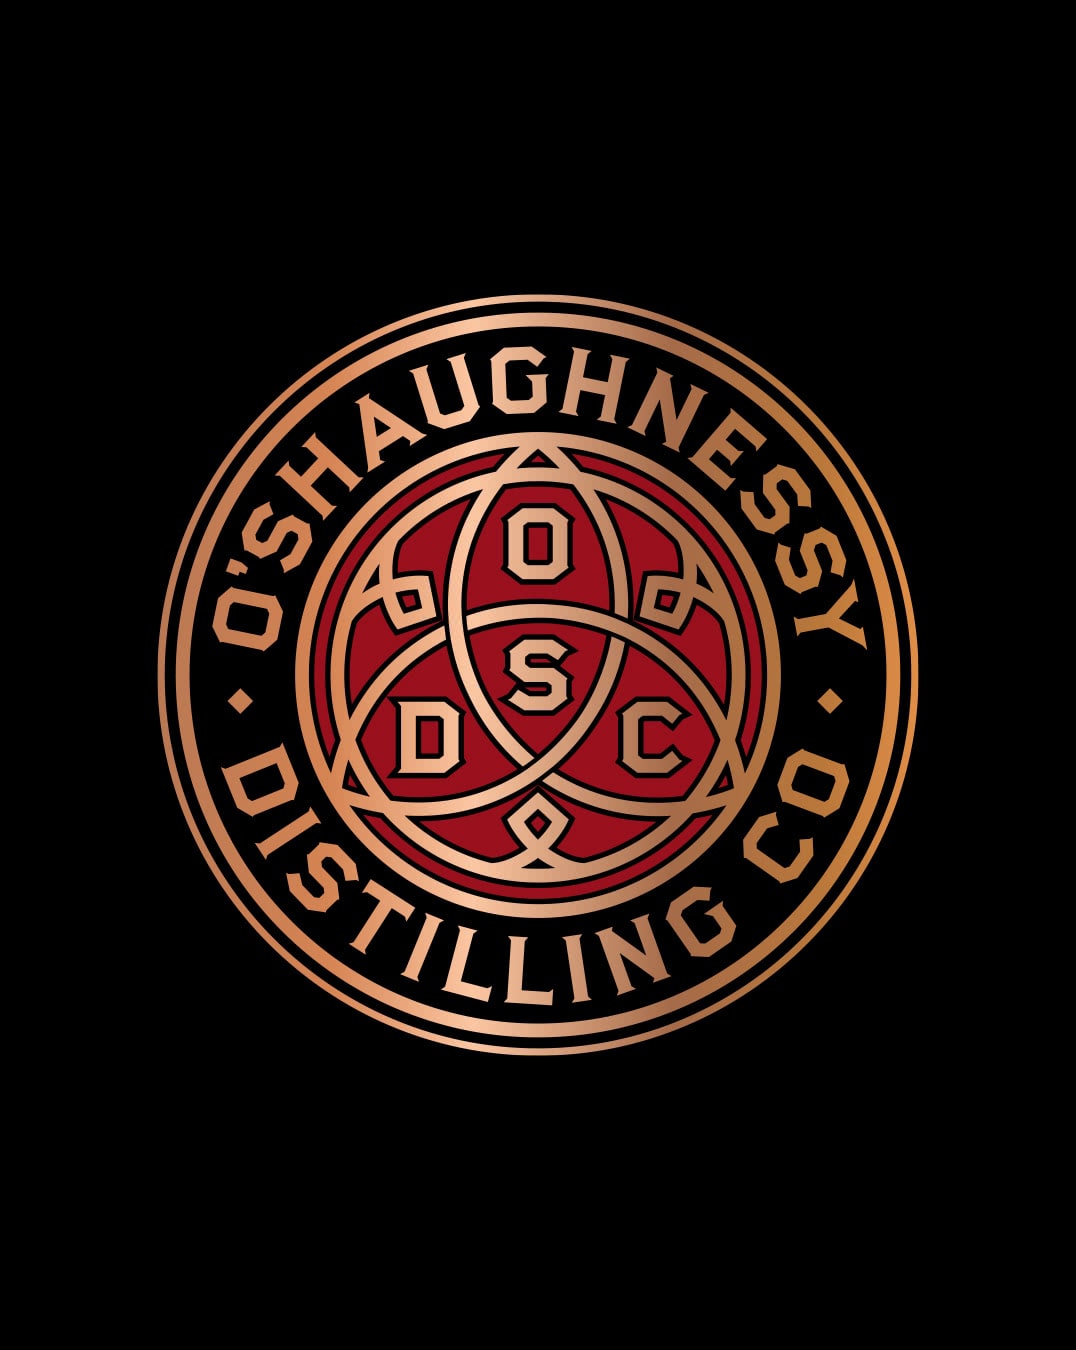 O’Shaughnessy Distilling Co. color logo design